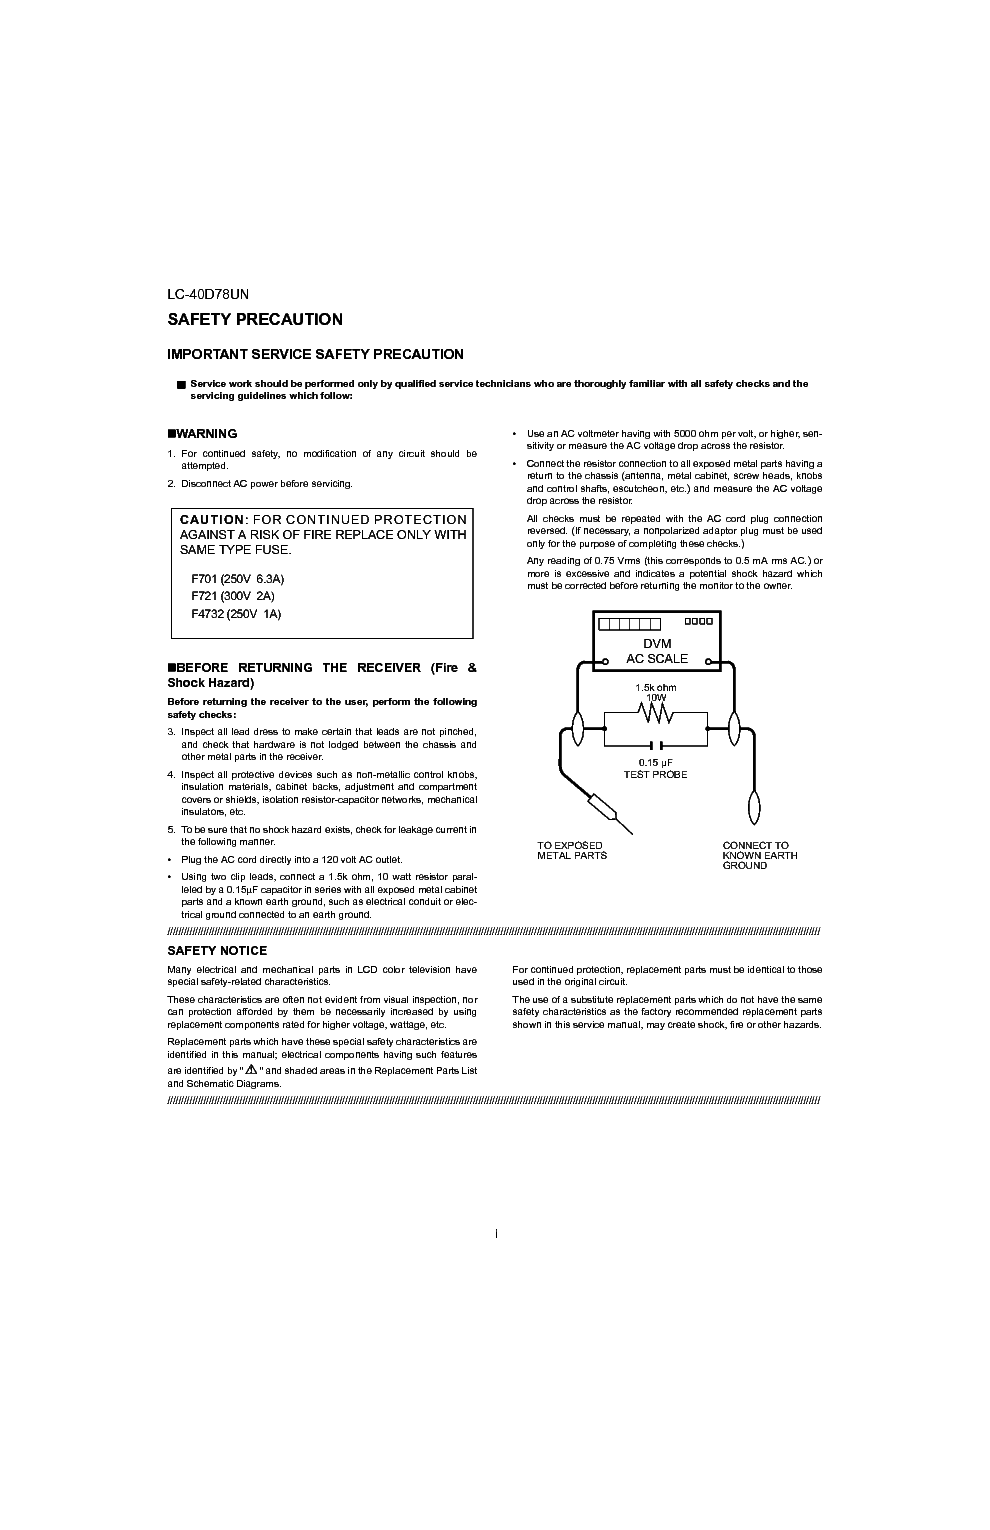 SHARP LC-40D78UN service manual (2nd page)